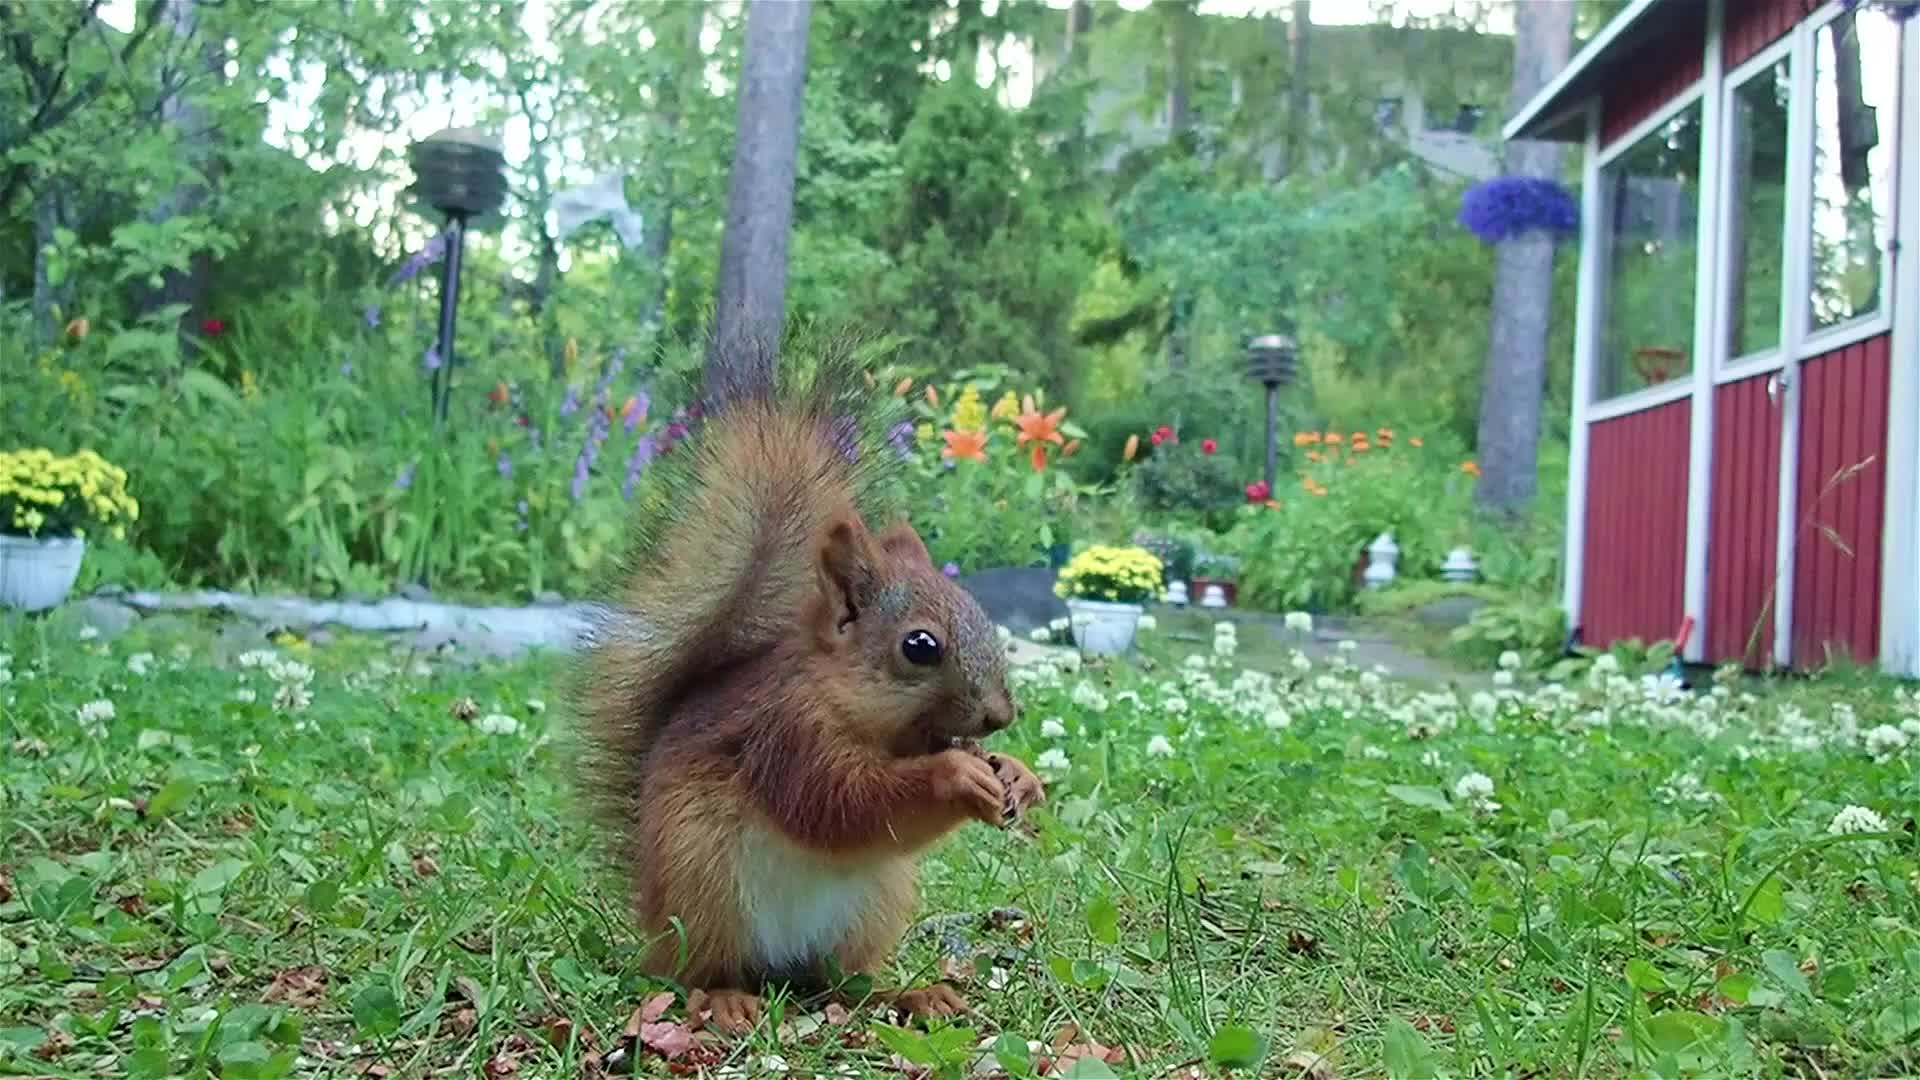 Juvenile squirrels swift reaction to hedgehog